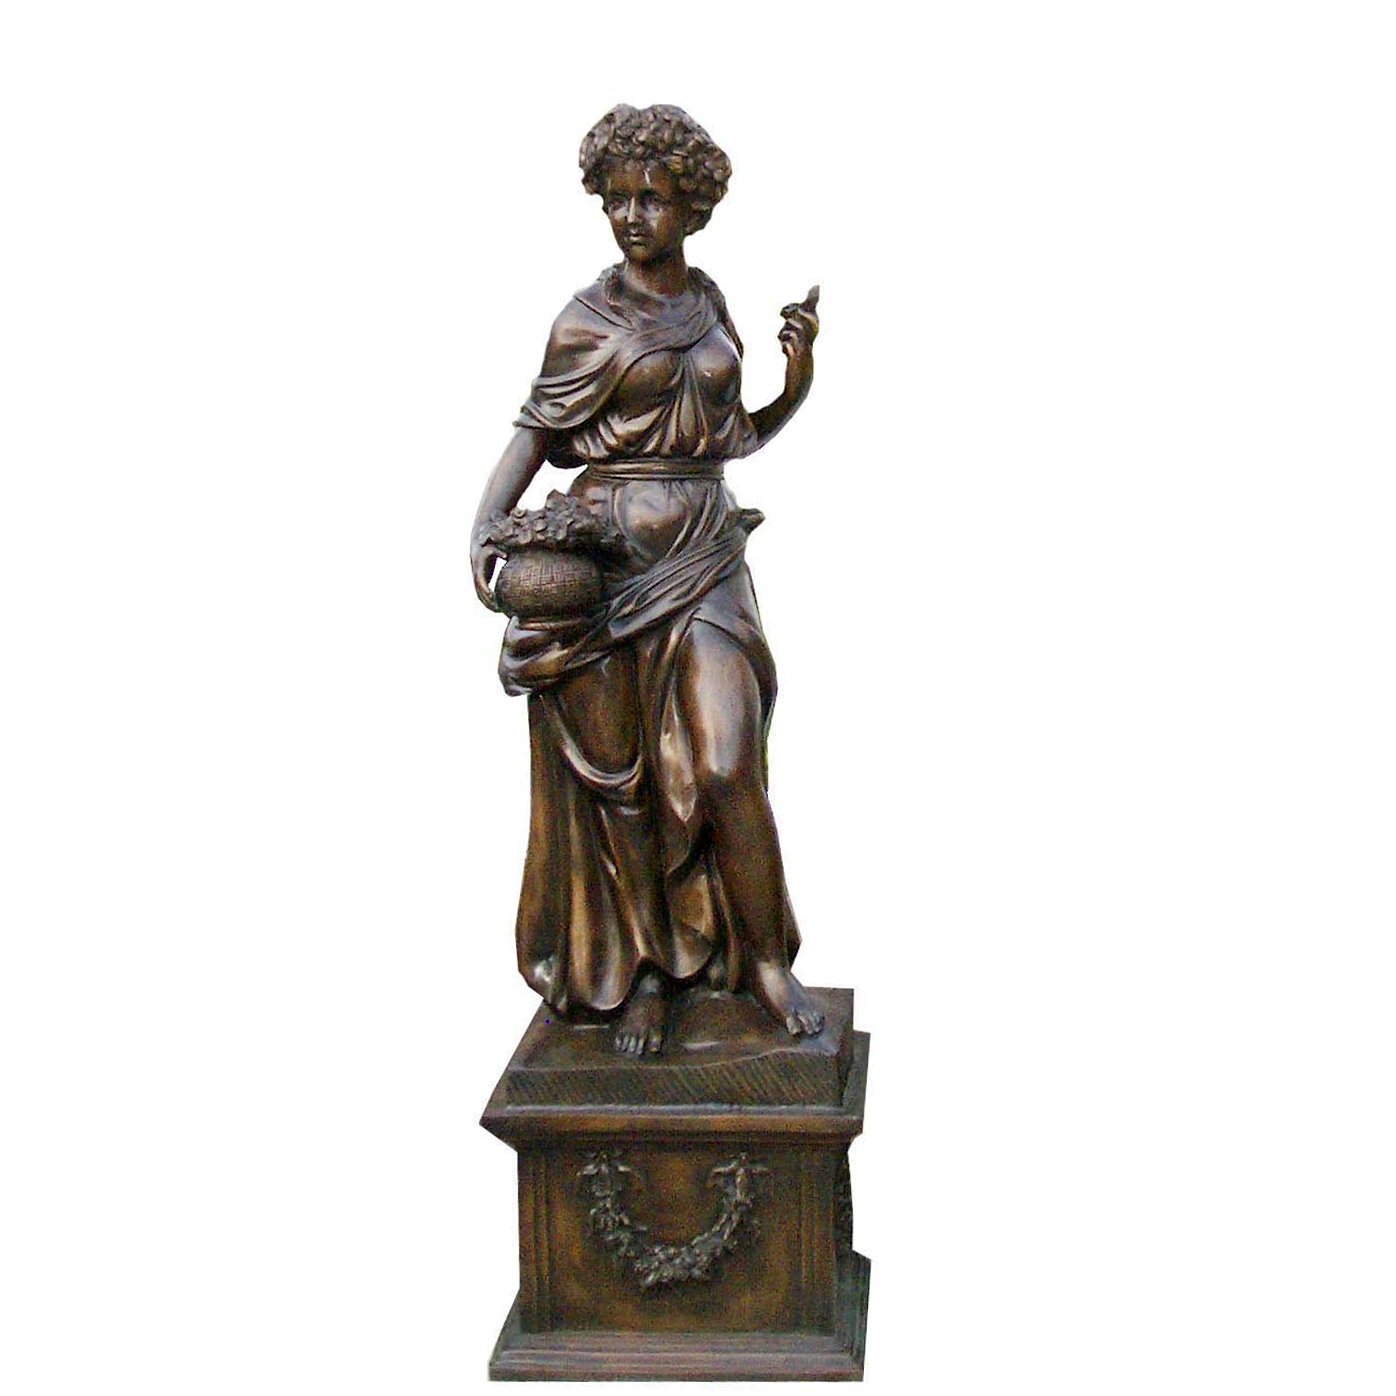 The bronze summer lady Season sculpture